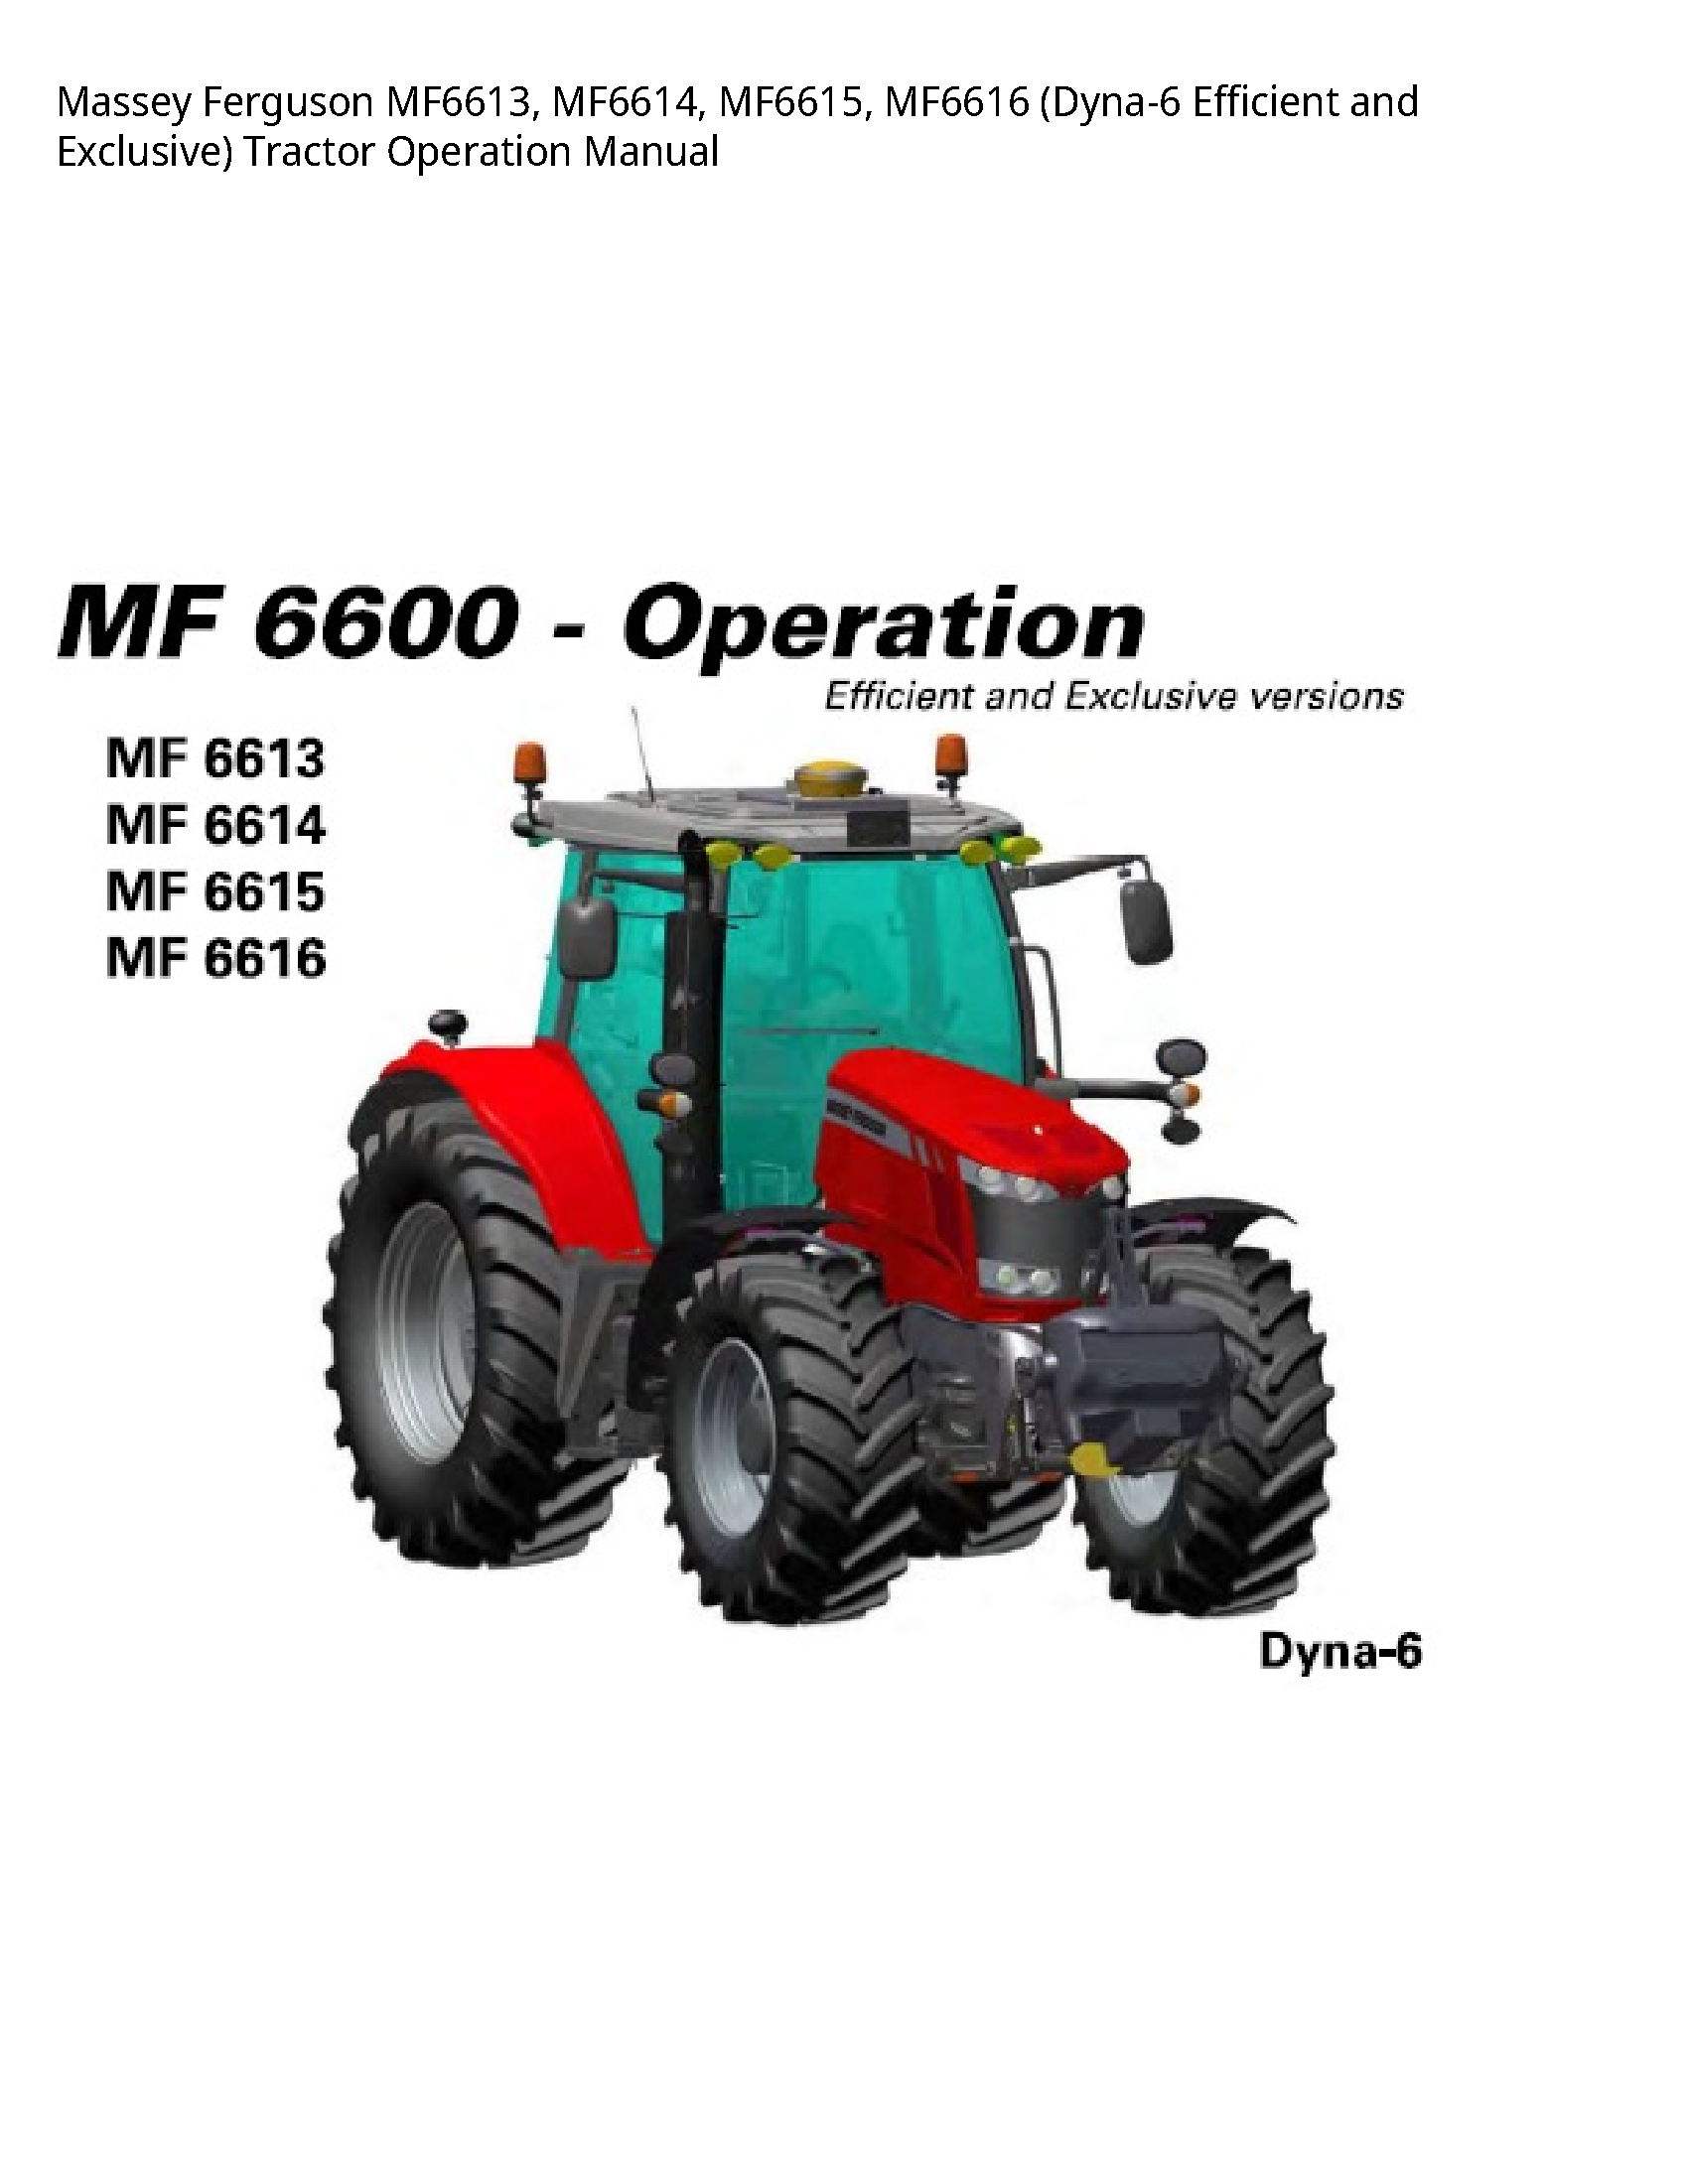 Massey Ferguson MF6613 Efficient  Exclusive) Tractor Operation manual